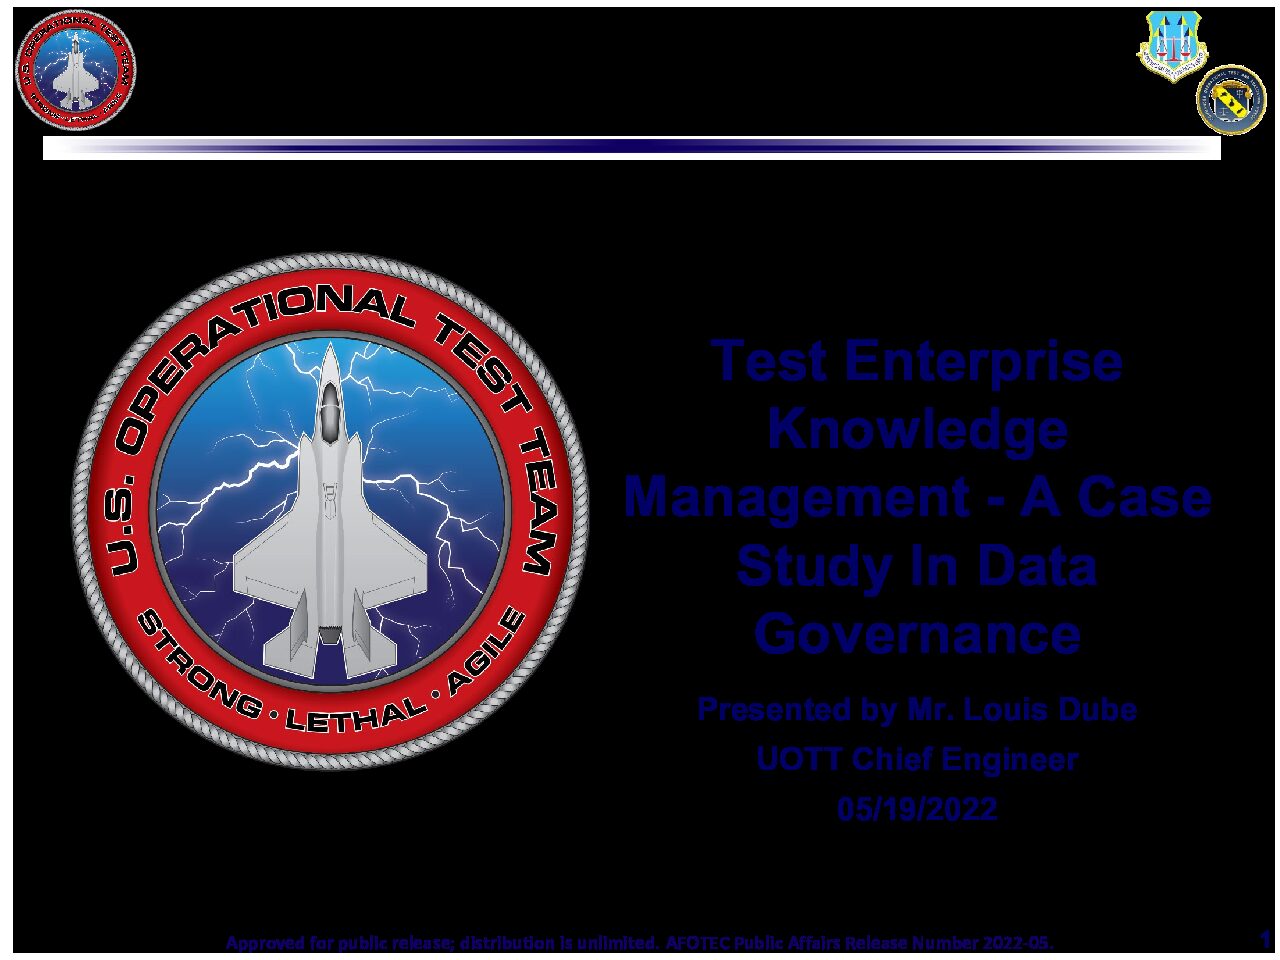 13-4_Dube_Test Enterprise Knowledge Management – A Case Study In Data Governance – Dube – AFOTEC PA 2022-05